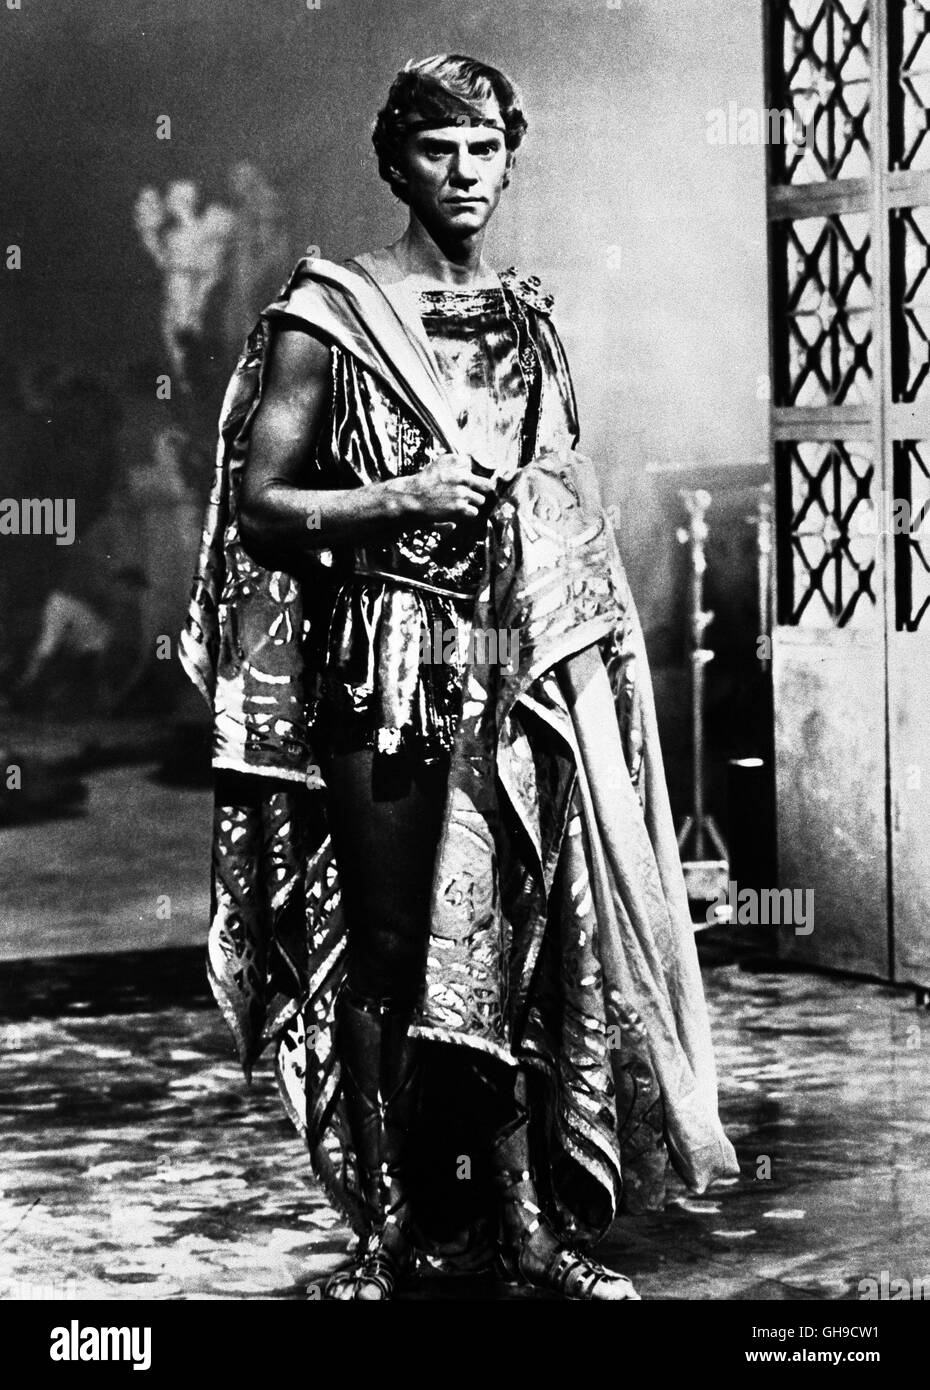 Emperor Gaius Germanicus Caesar (MALCOLM MCDOWELL) Film, Fernsehen, Drama, Erotikfilm, 70er Regie: Tinto Brass aka. Caligola Stock Photo